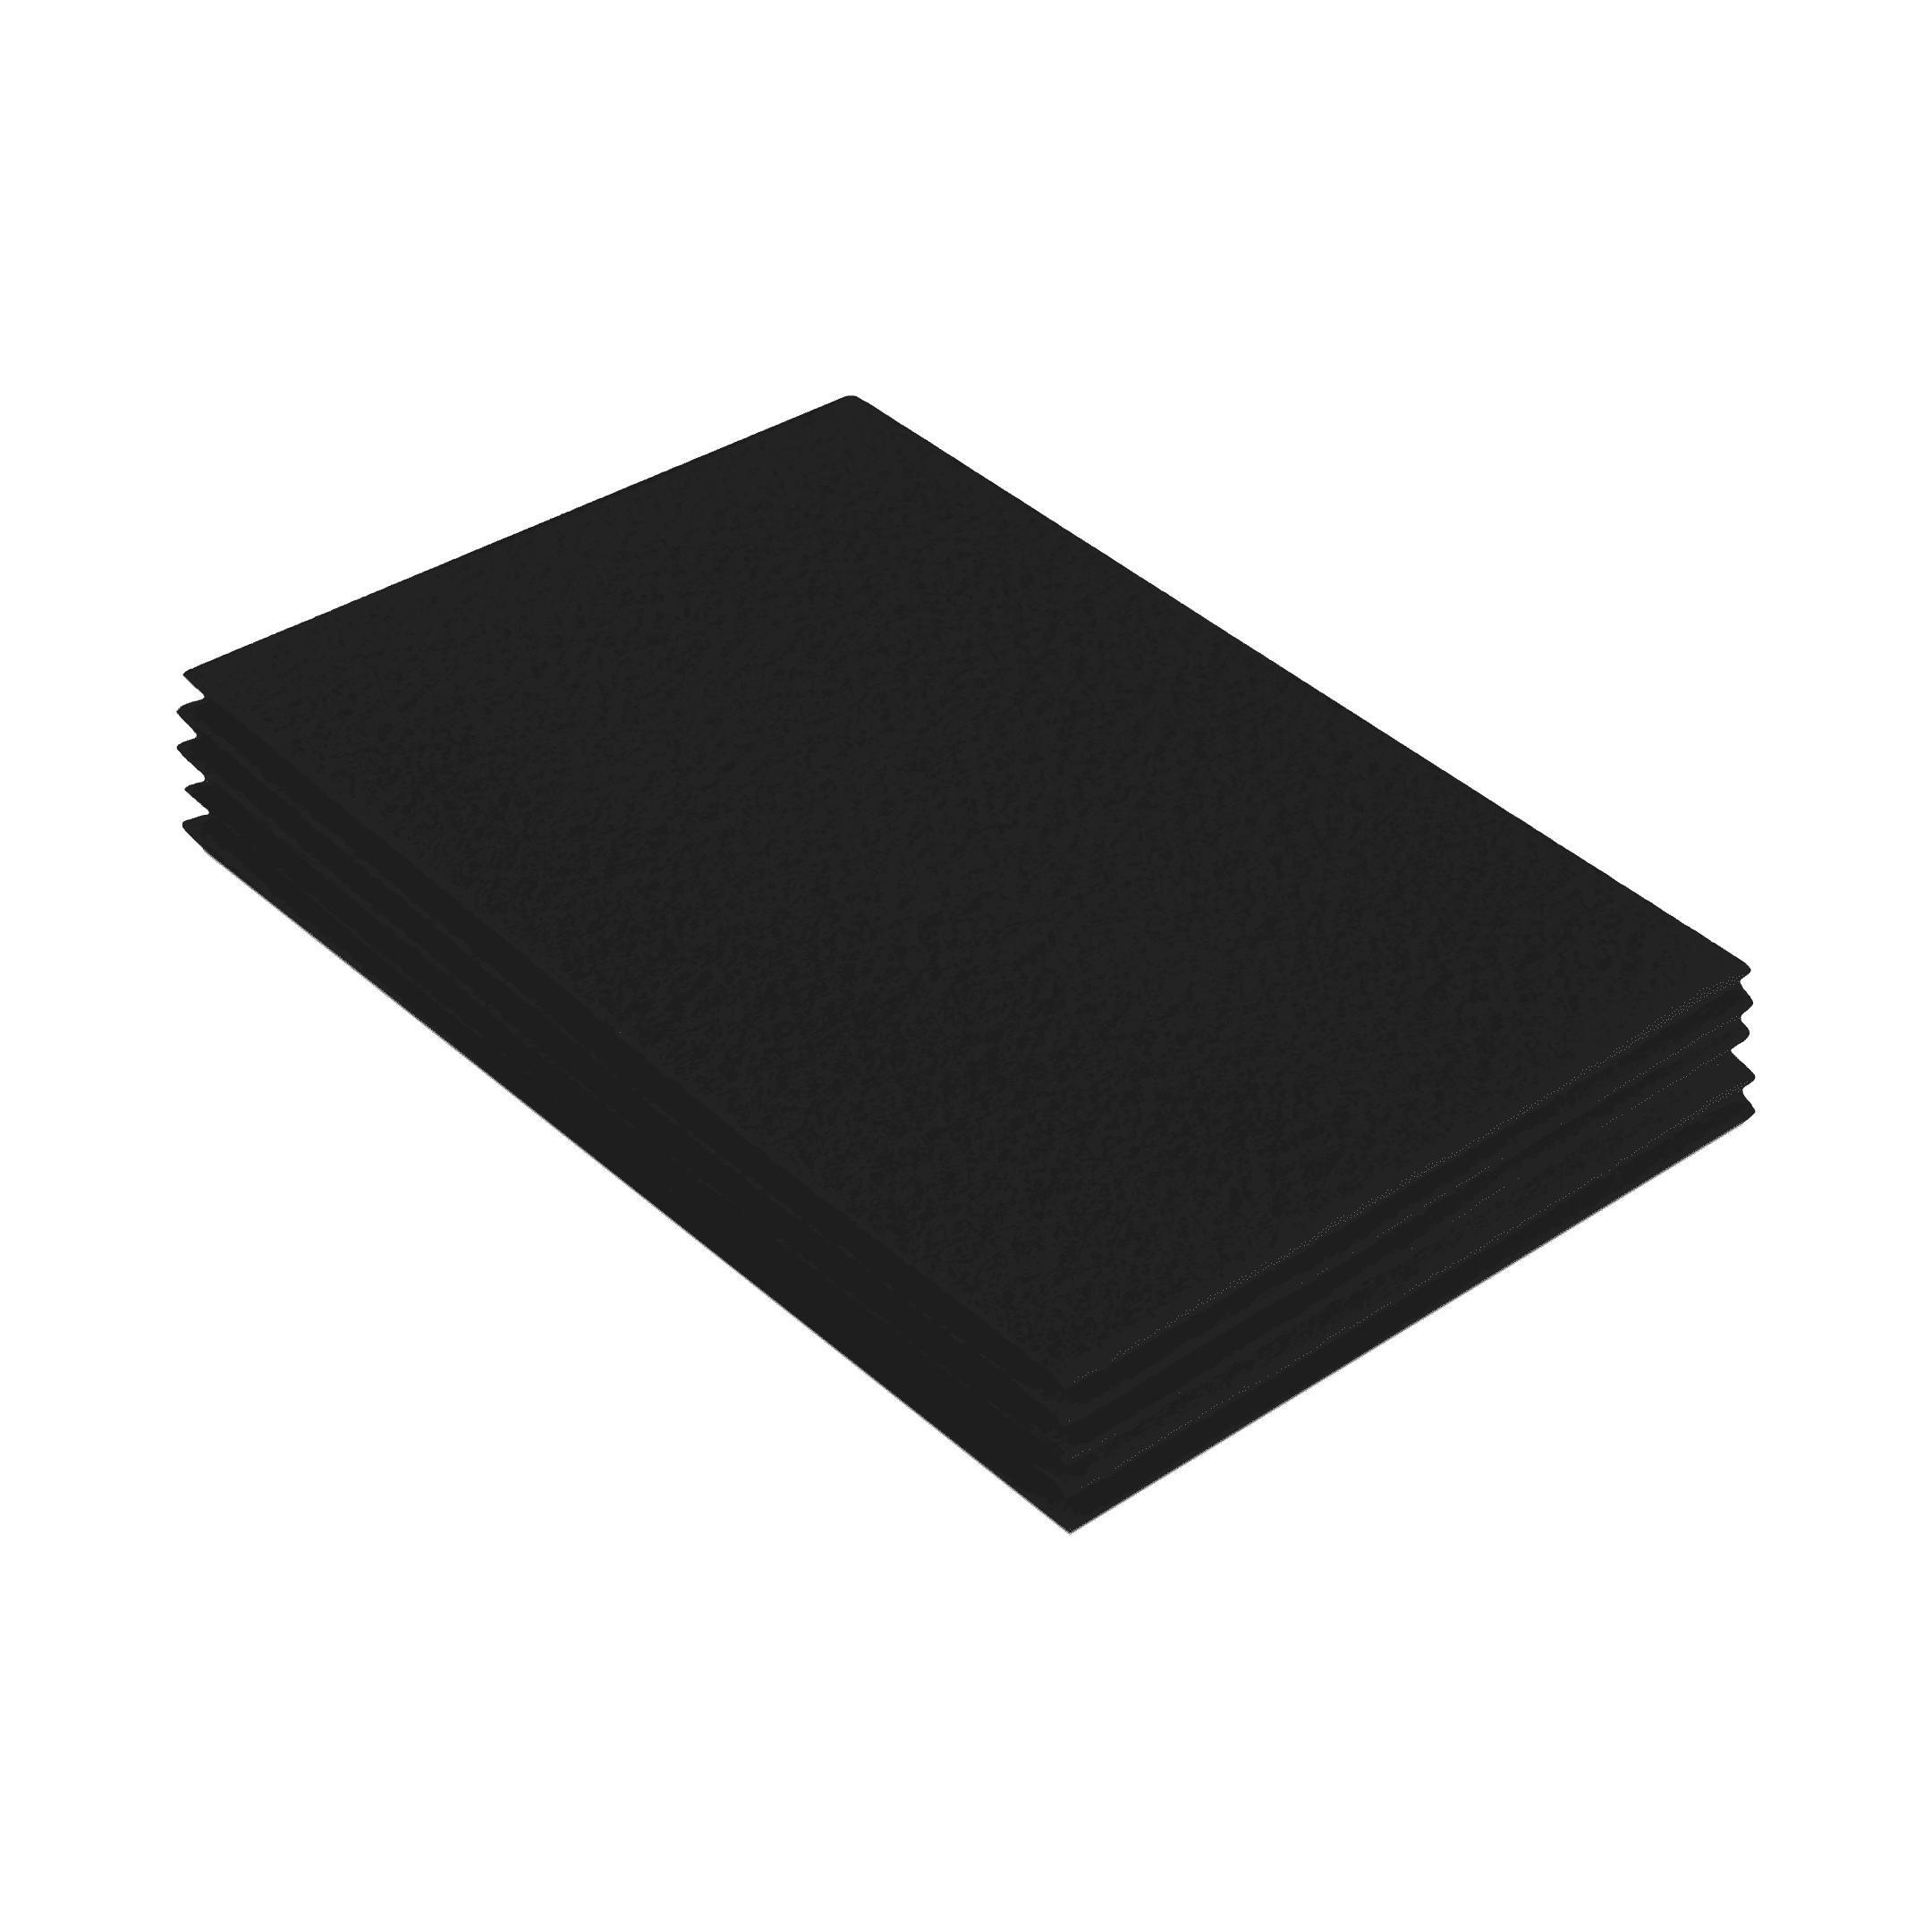 FabricLA Acrylic Felt Fabric Sheets for Crafts | Precut 9 x 12 inch (20 cm x 30 cm) Felt Squares | Felt Fabric Sheets for DIY Arts & Crafts, Hobby